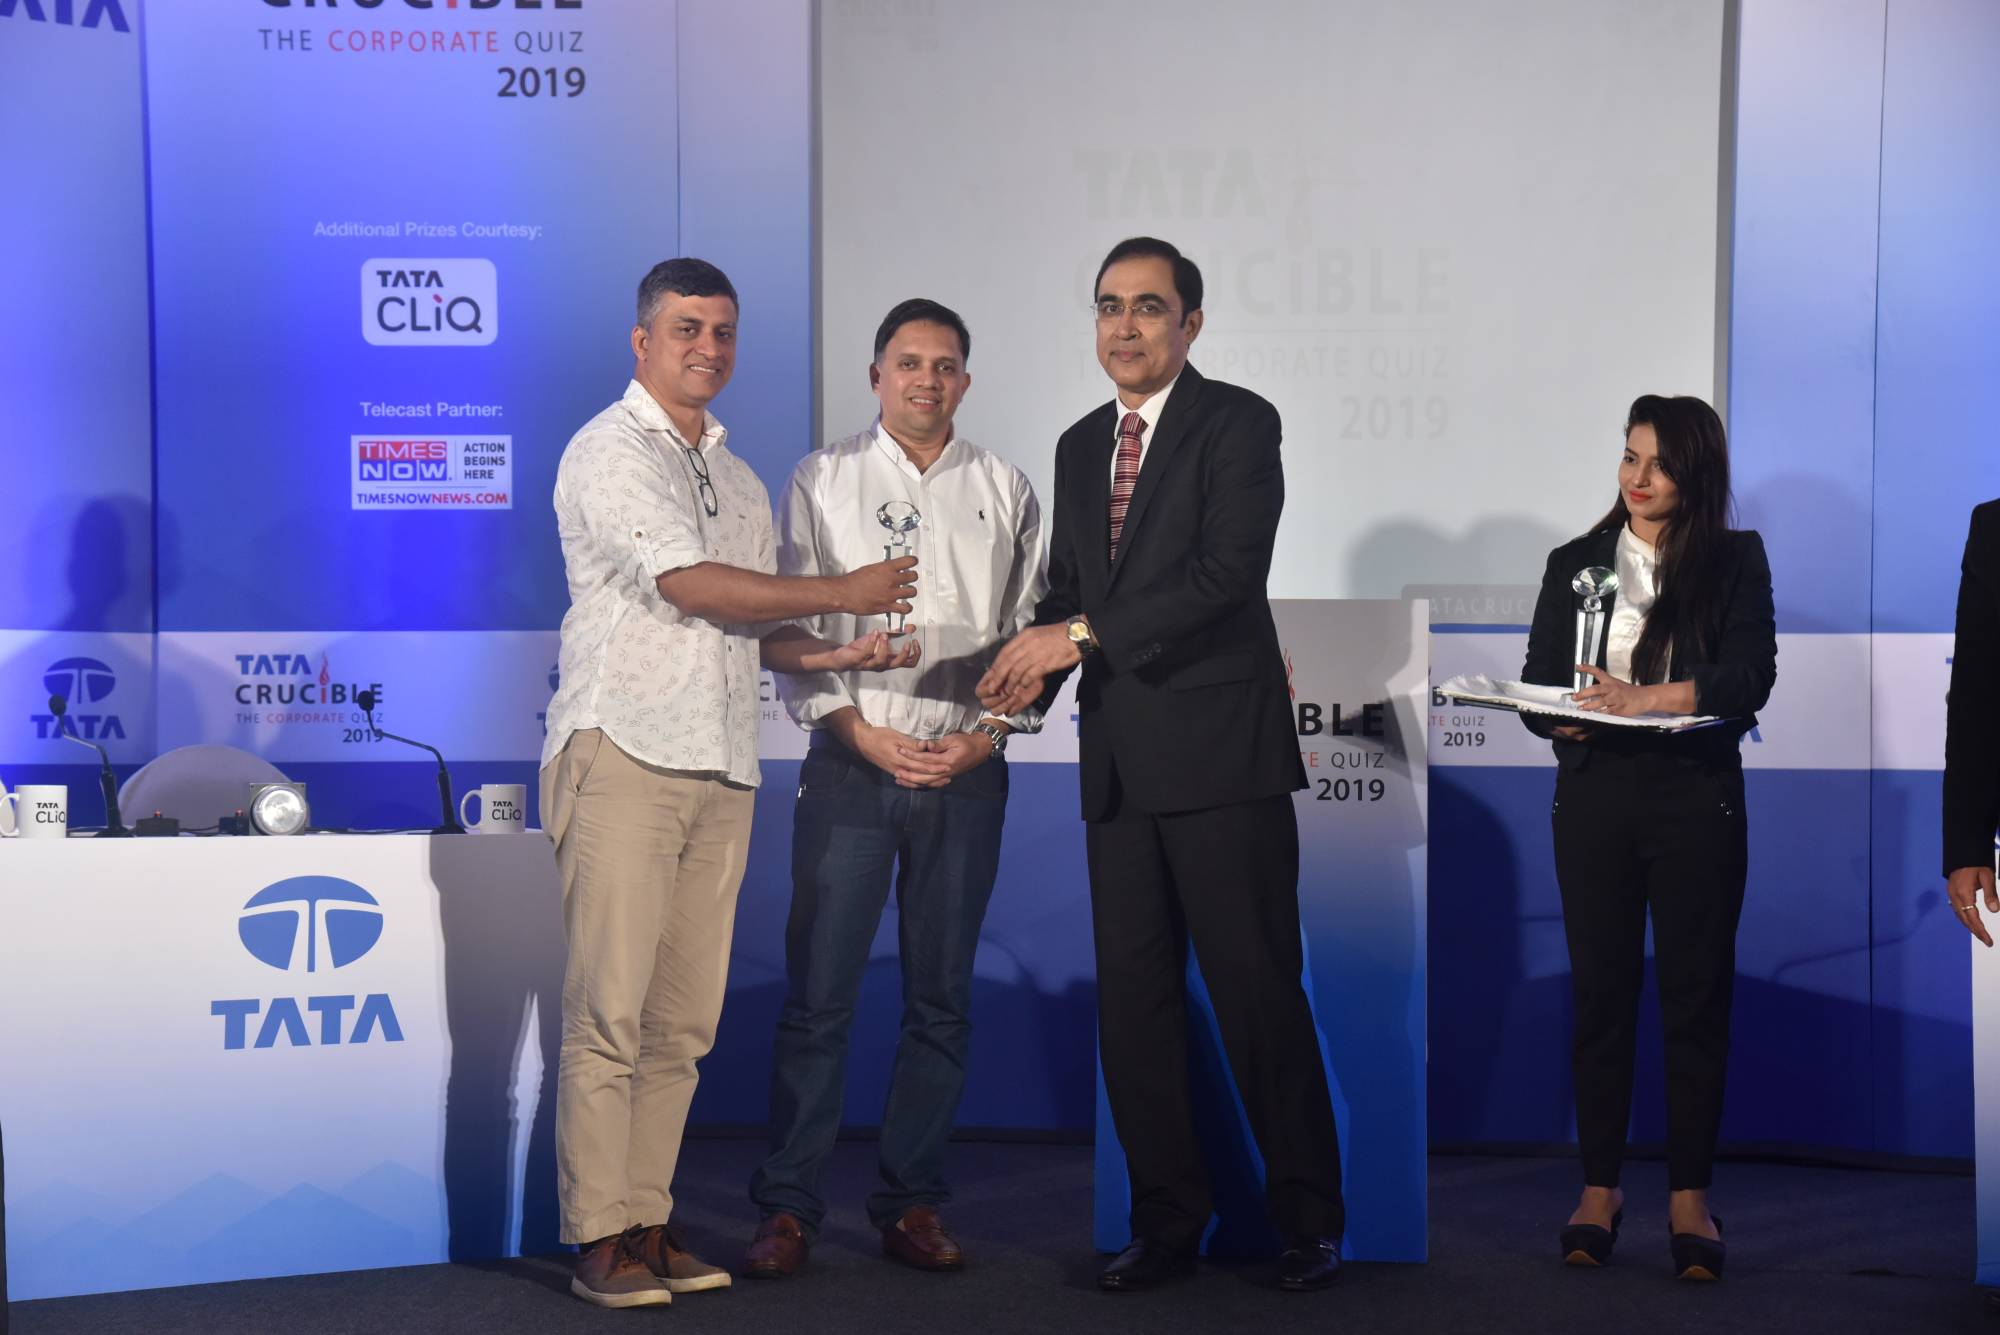 Tata Crucible Corporate Quiz Results For Winners - Hanning Motors 